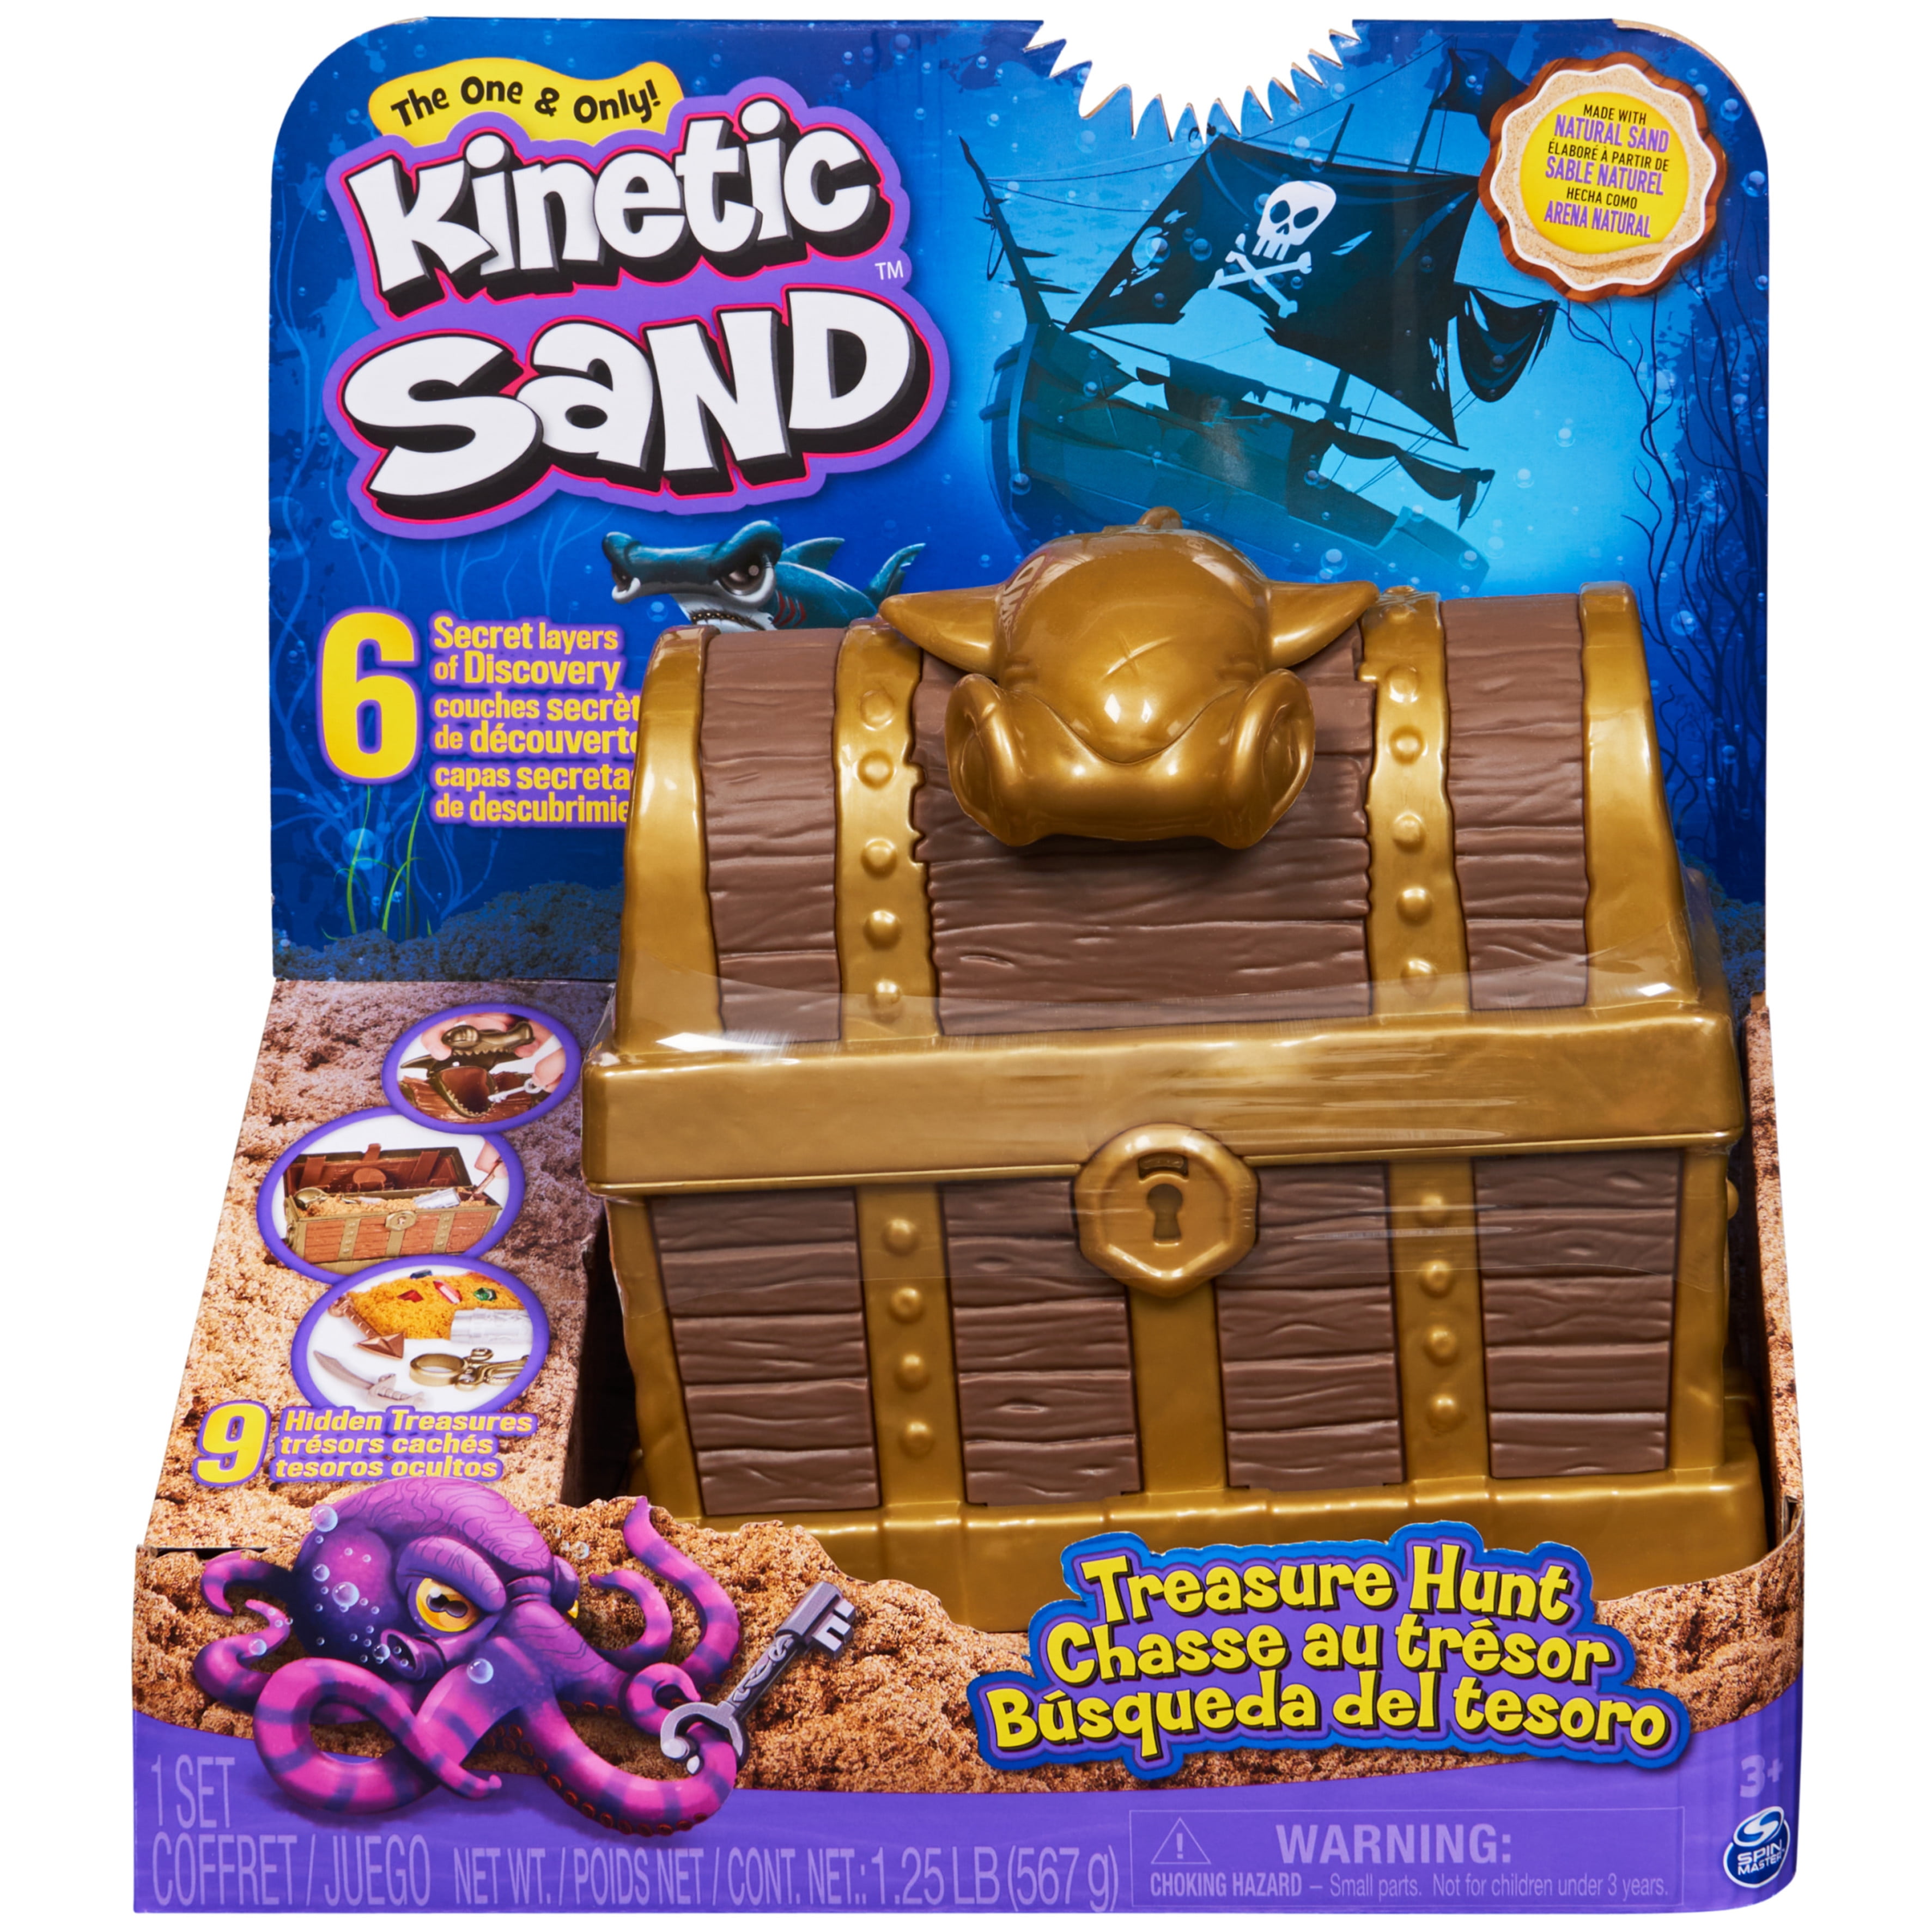 Sensory Magic Sand Fantasy Playset Assortment